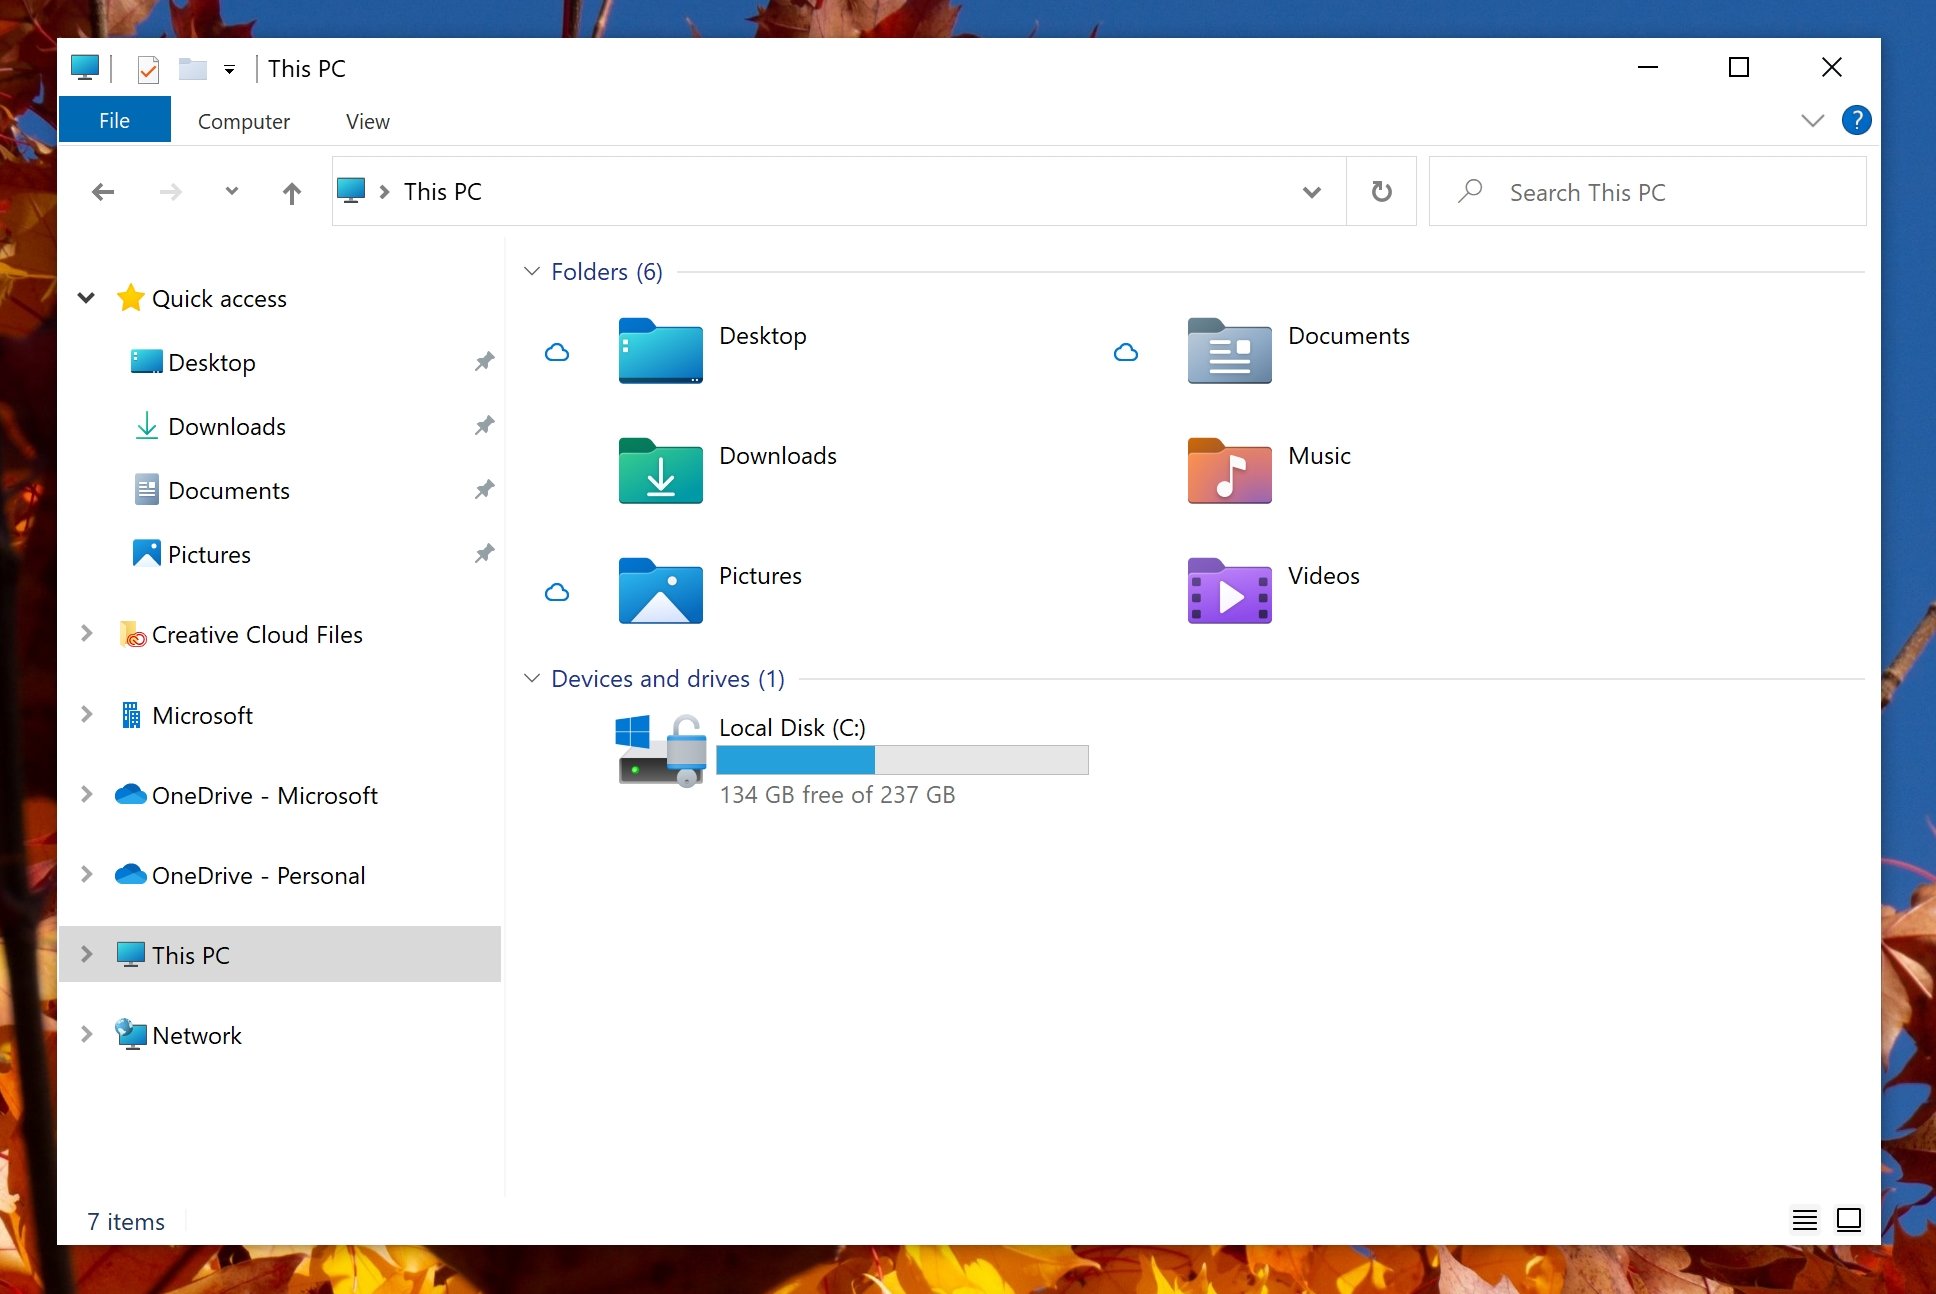 Windows 10 nova interface